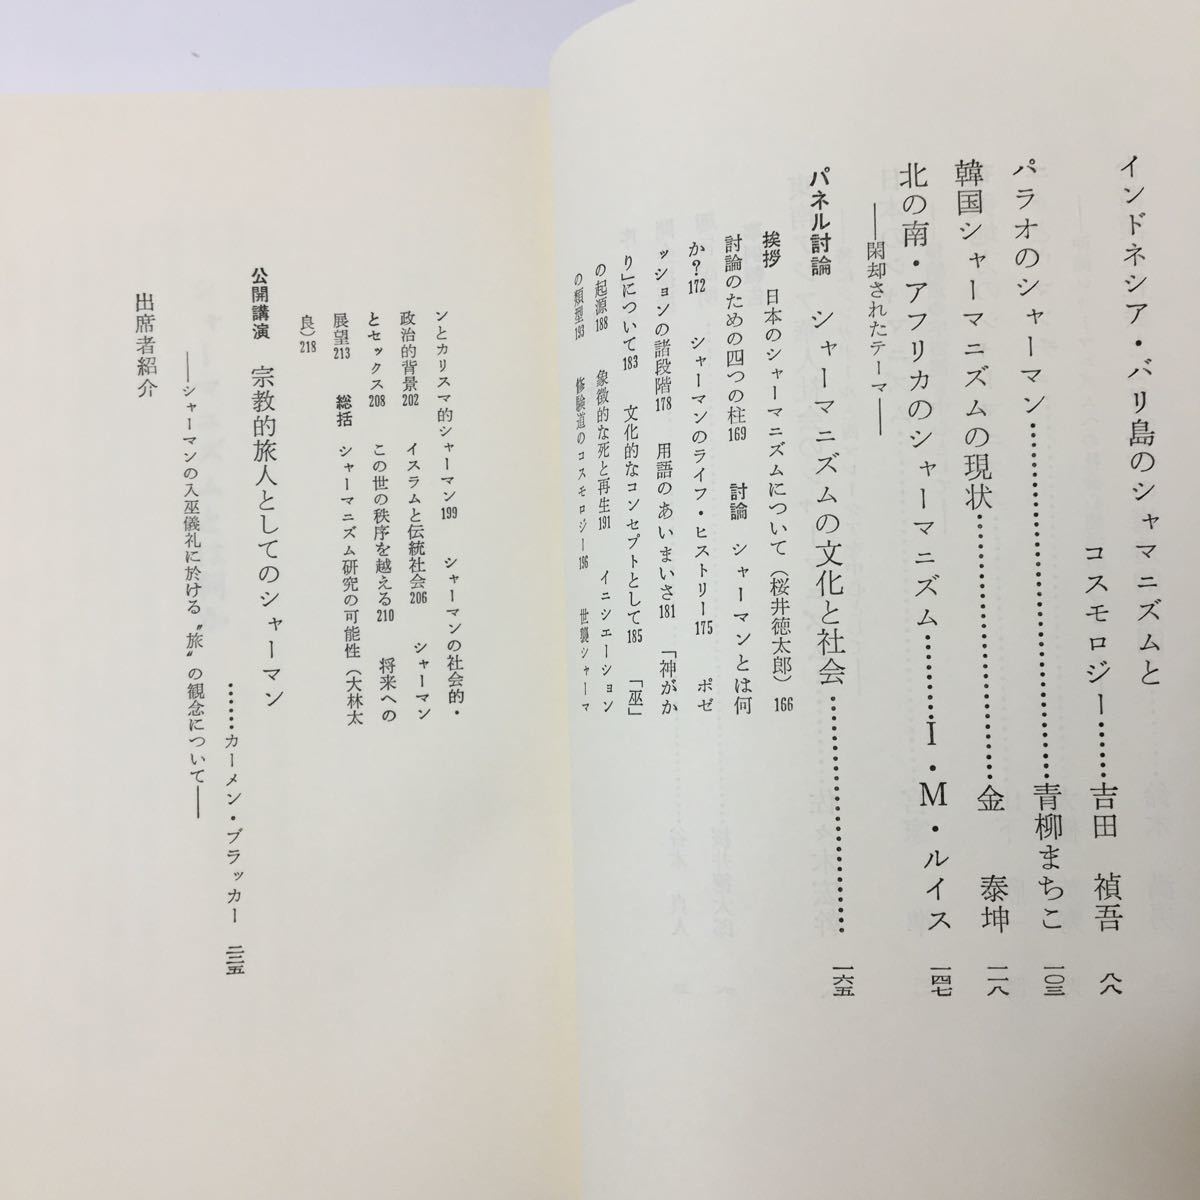 zaa0365* car -manizm is some : international simpojium: south person car -manizm Kansai foreign language university international culture research place compilation 1983.12